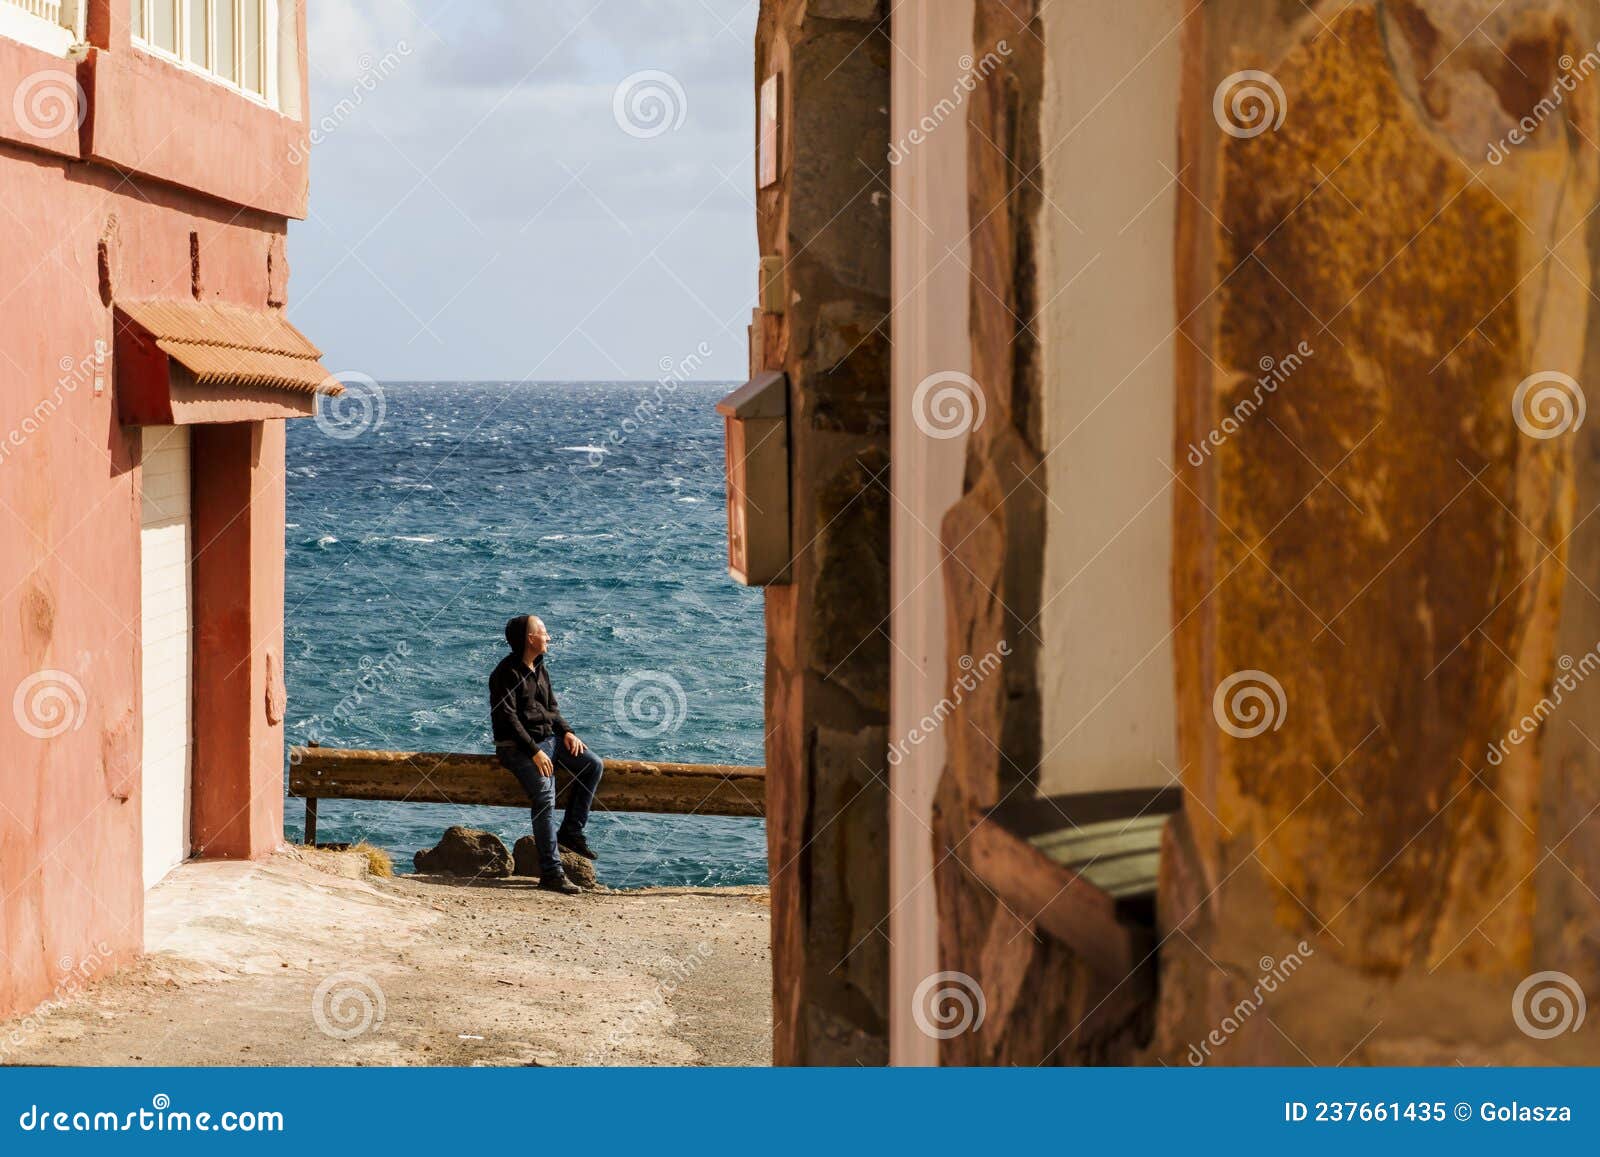 a man enjoying the sun and the ocean sitting on the seaside railing in pozo izquierdo, canary islands, spain